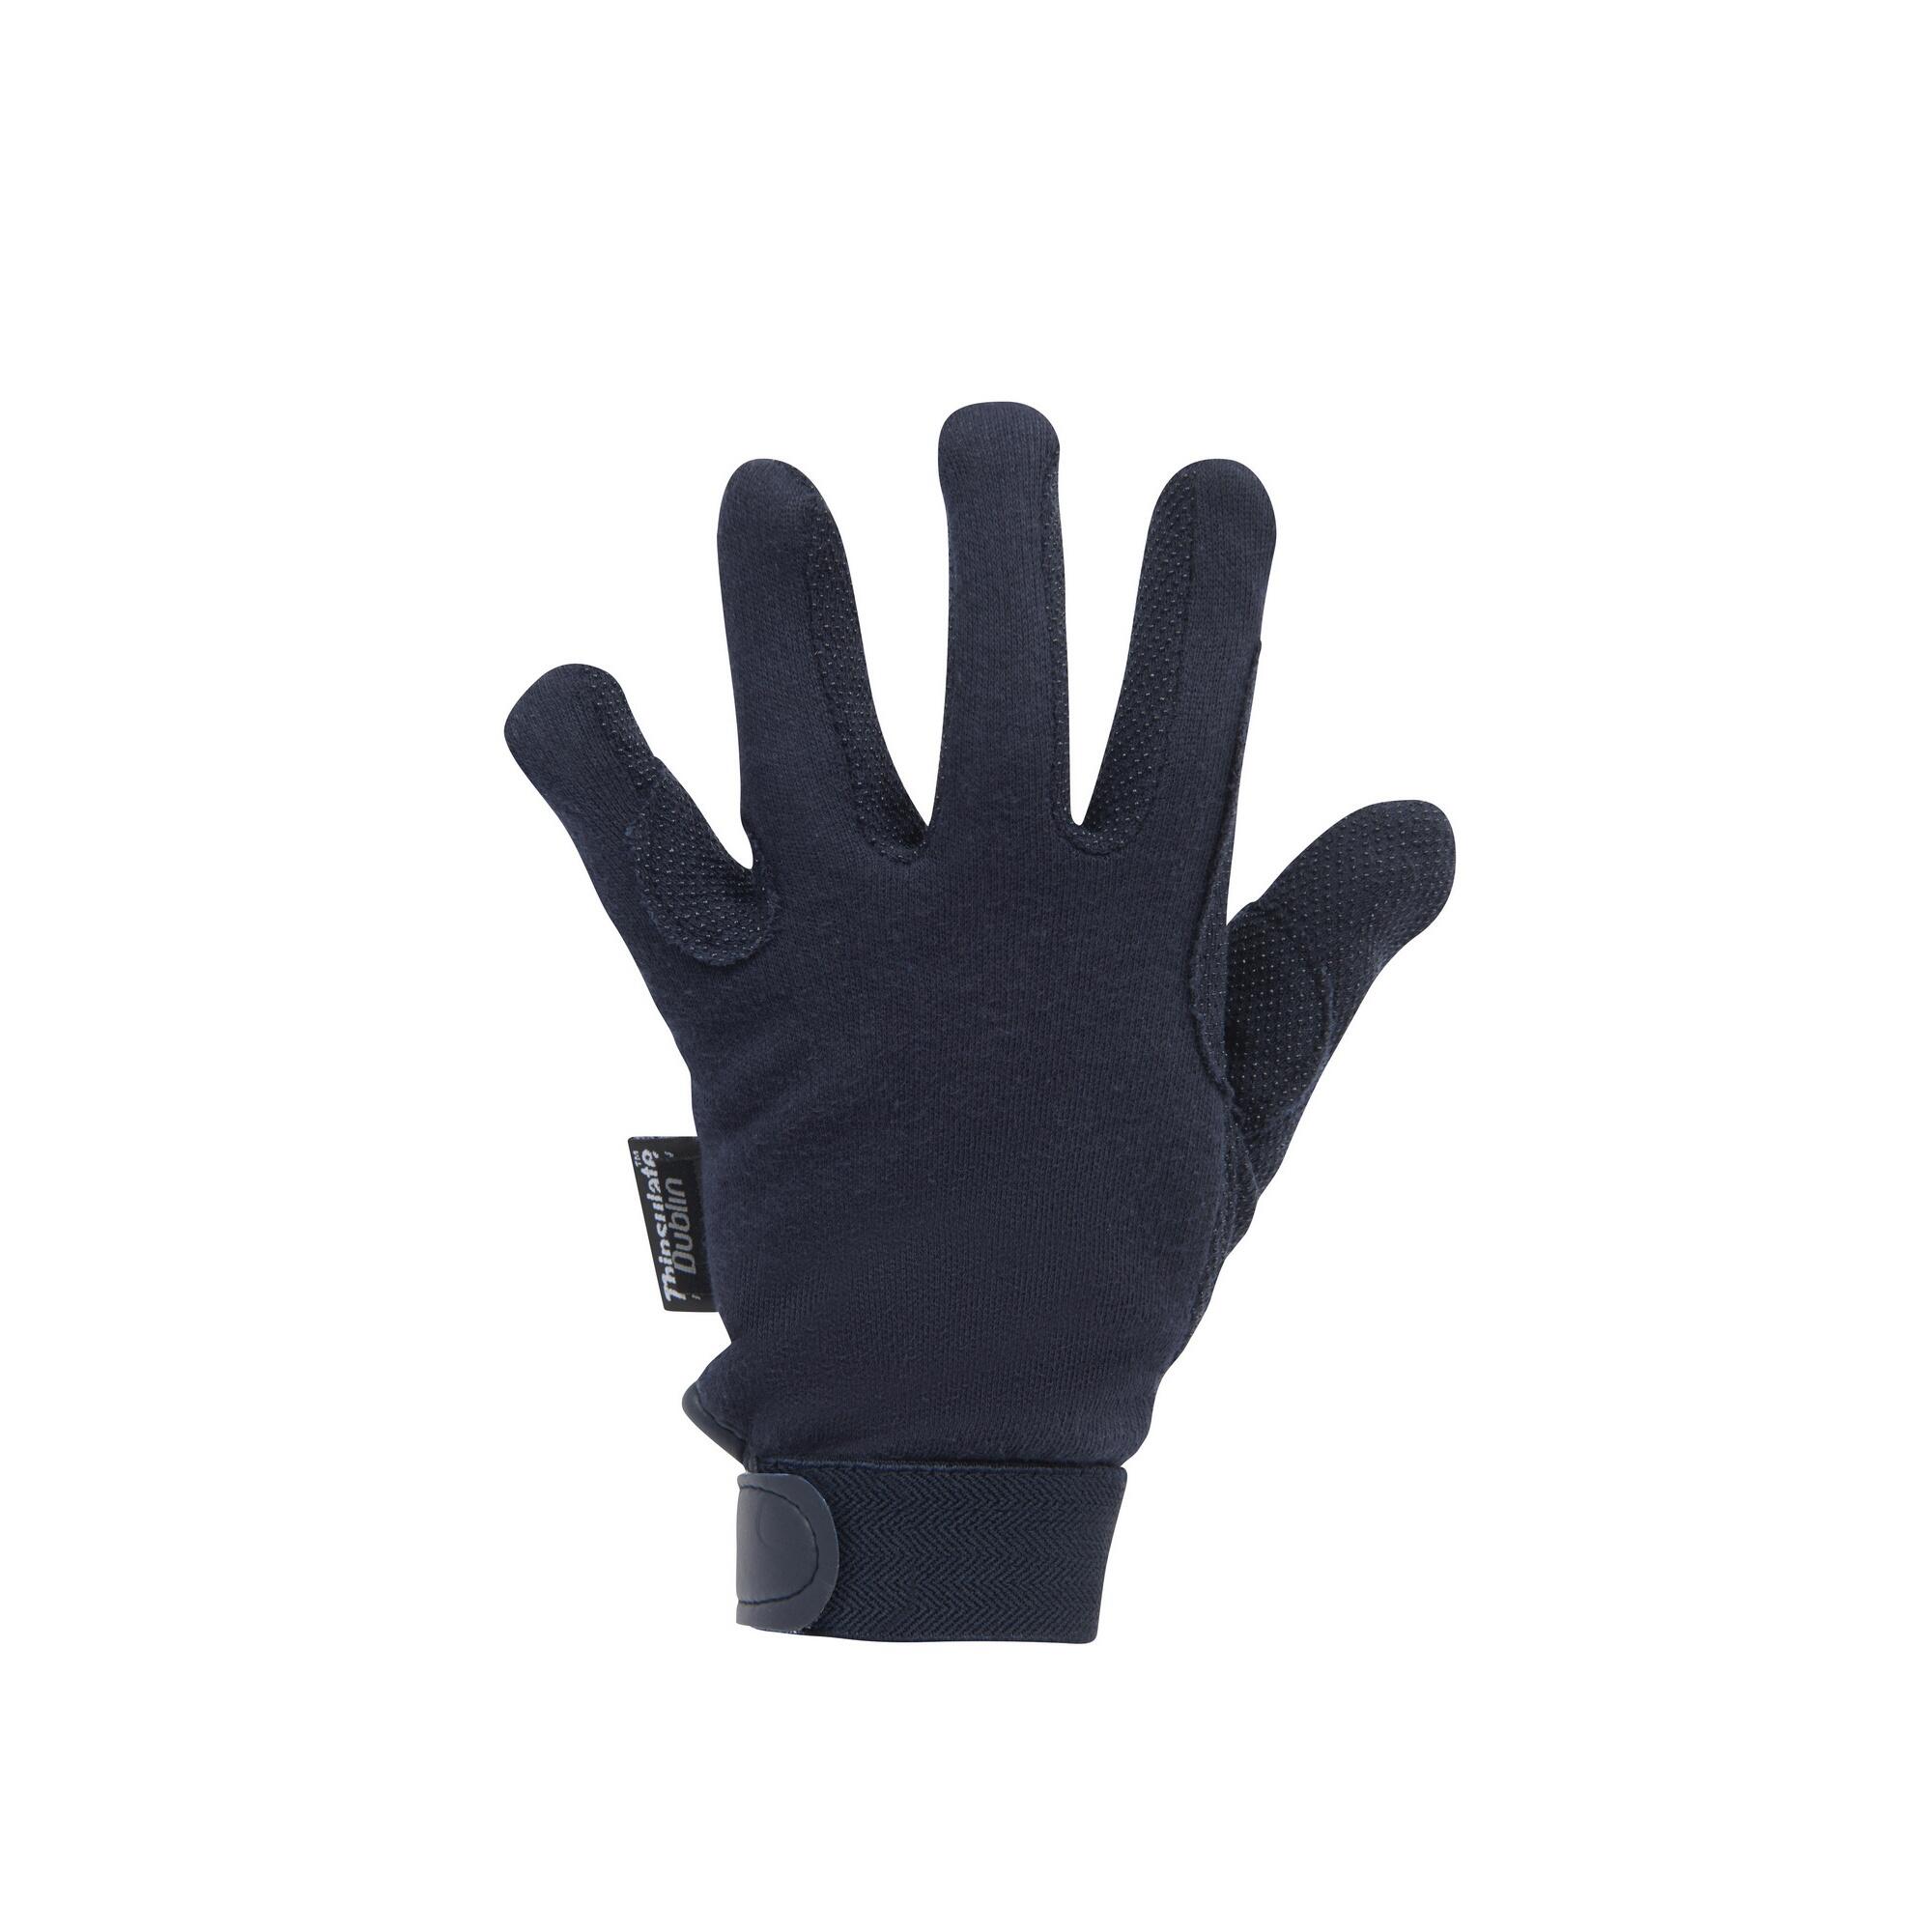 DUBLIN Unisex Thinsulate Winter Track Riding Gloves (Navy)